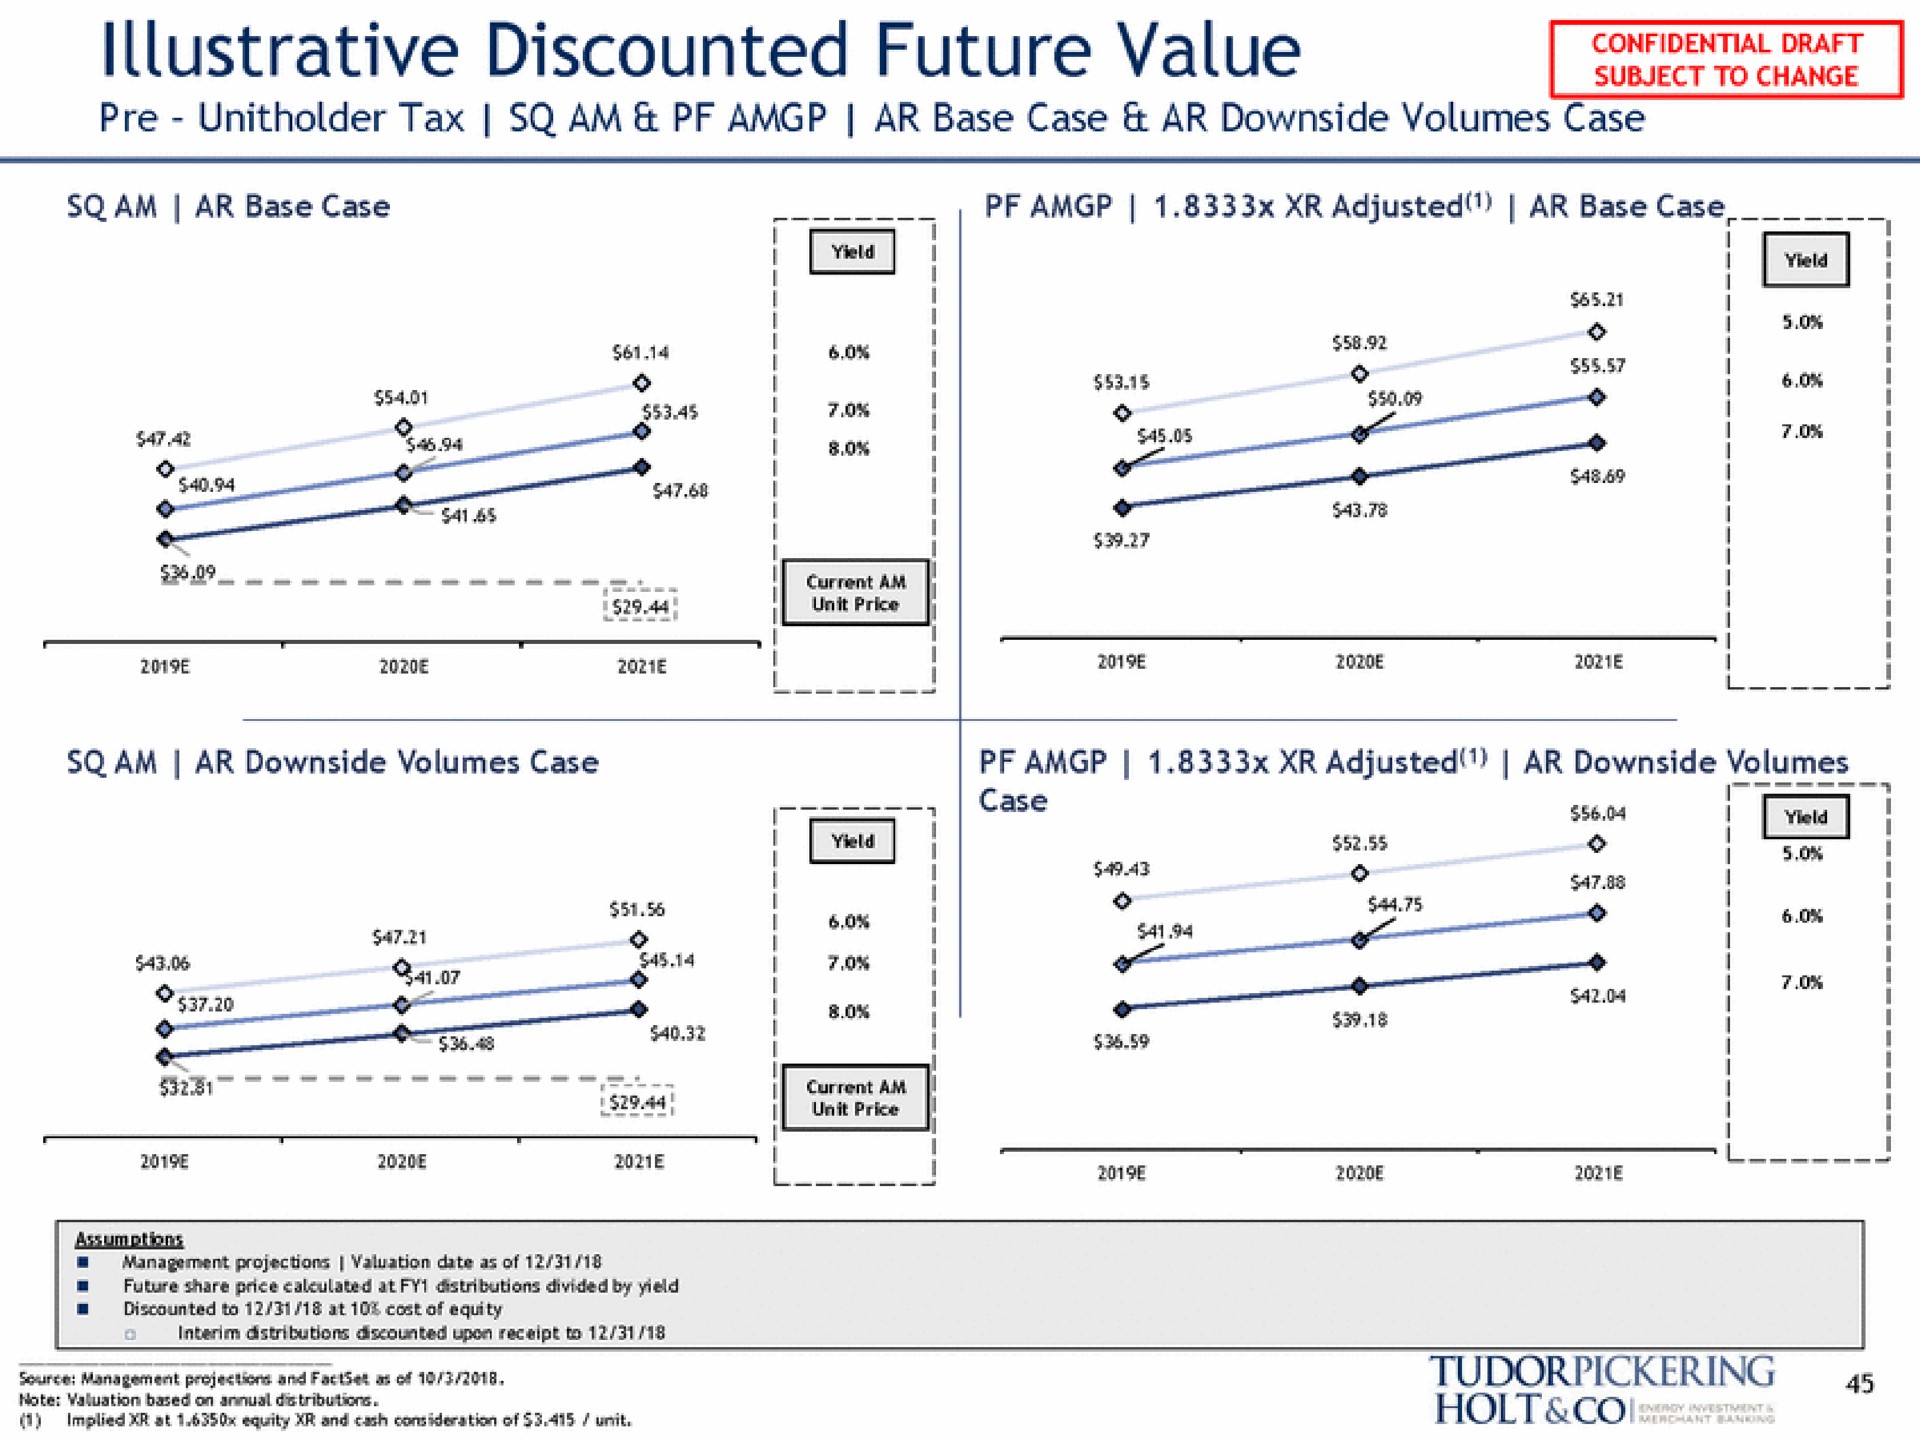 illustrative discounted future value siren | Tudor, Pickering, Holt & Co